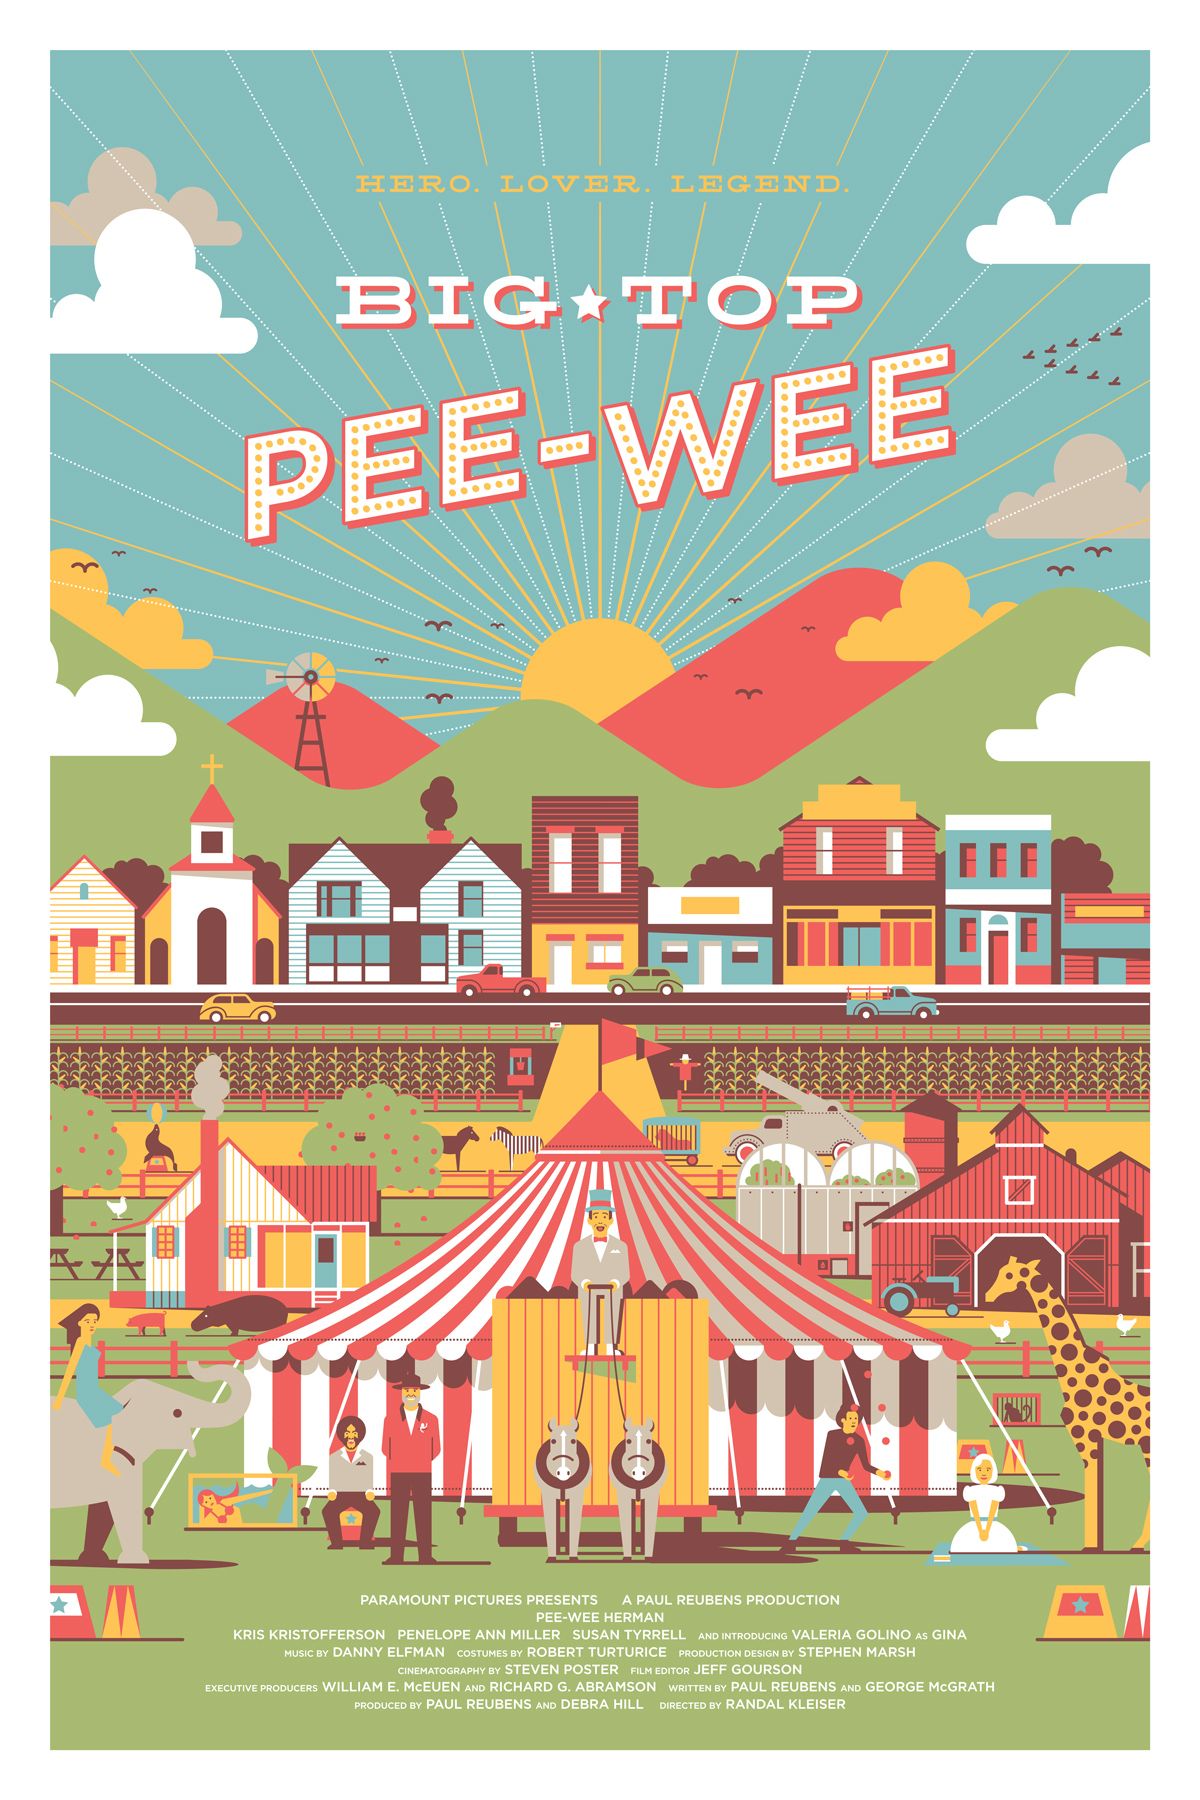 Big Top Pee-wee (1988) Main Poster